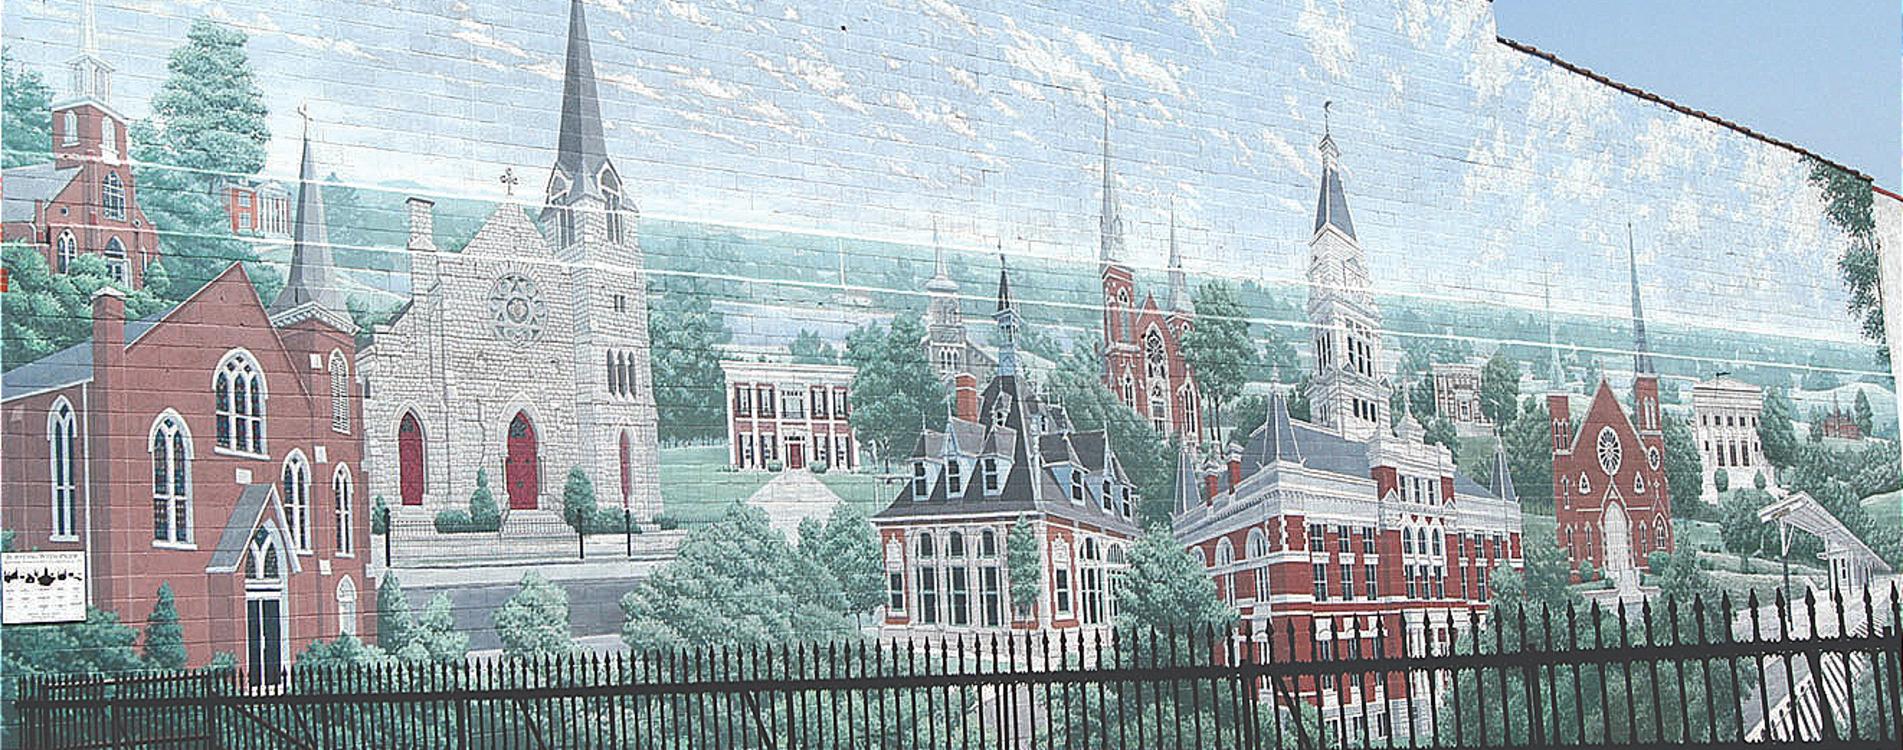 mural of historic buildings